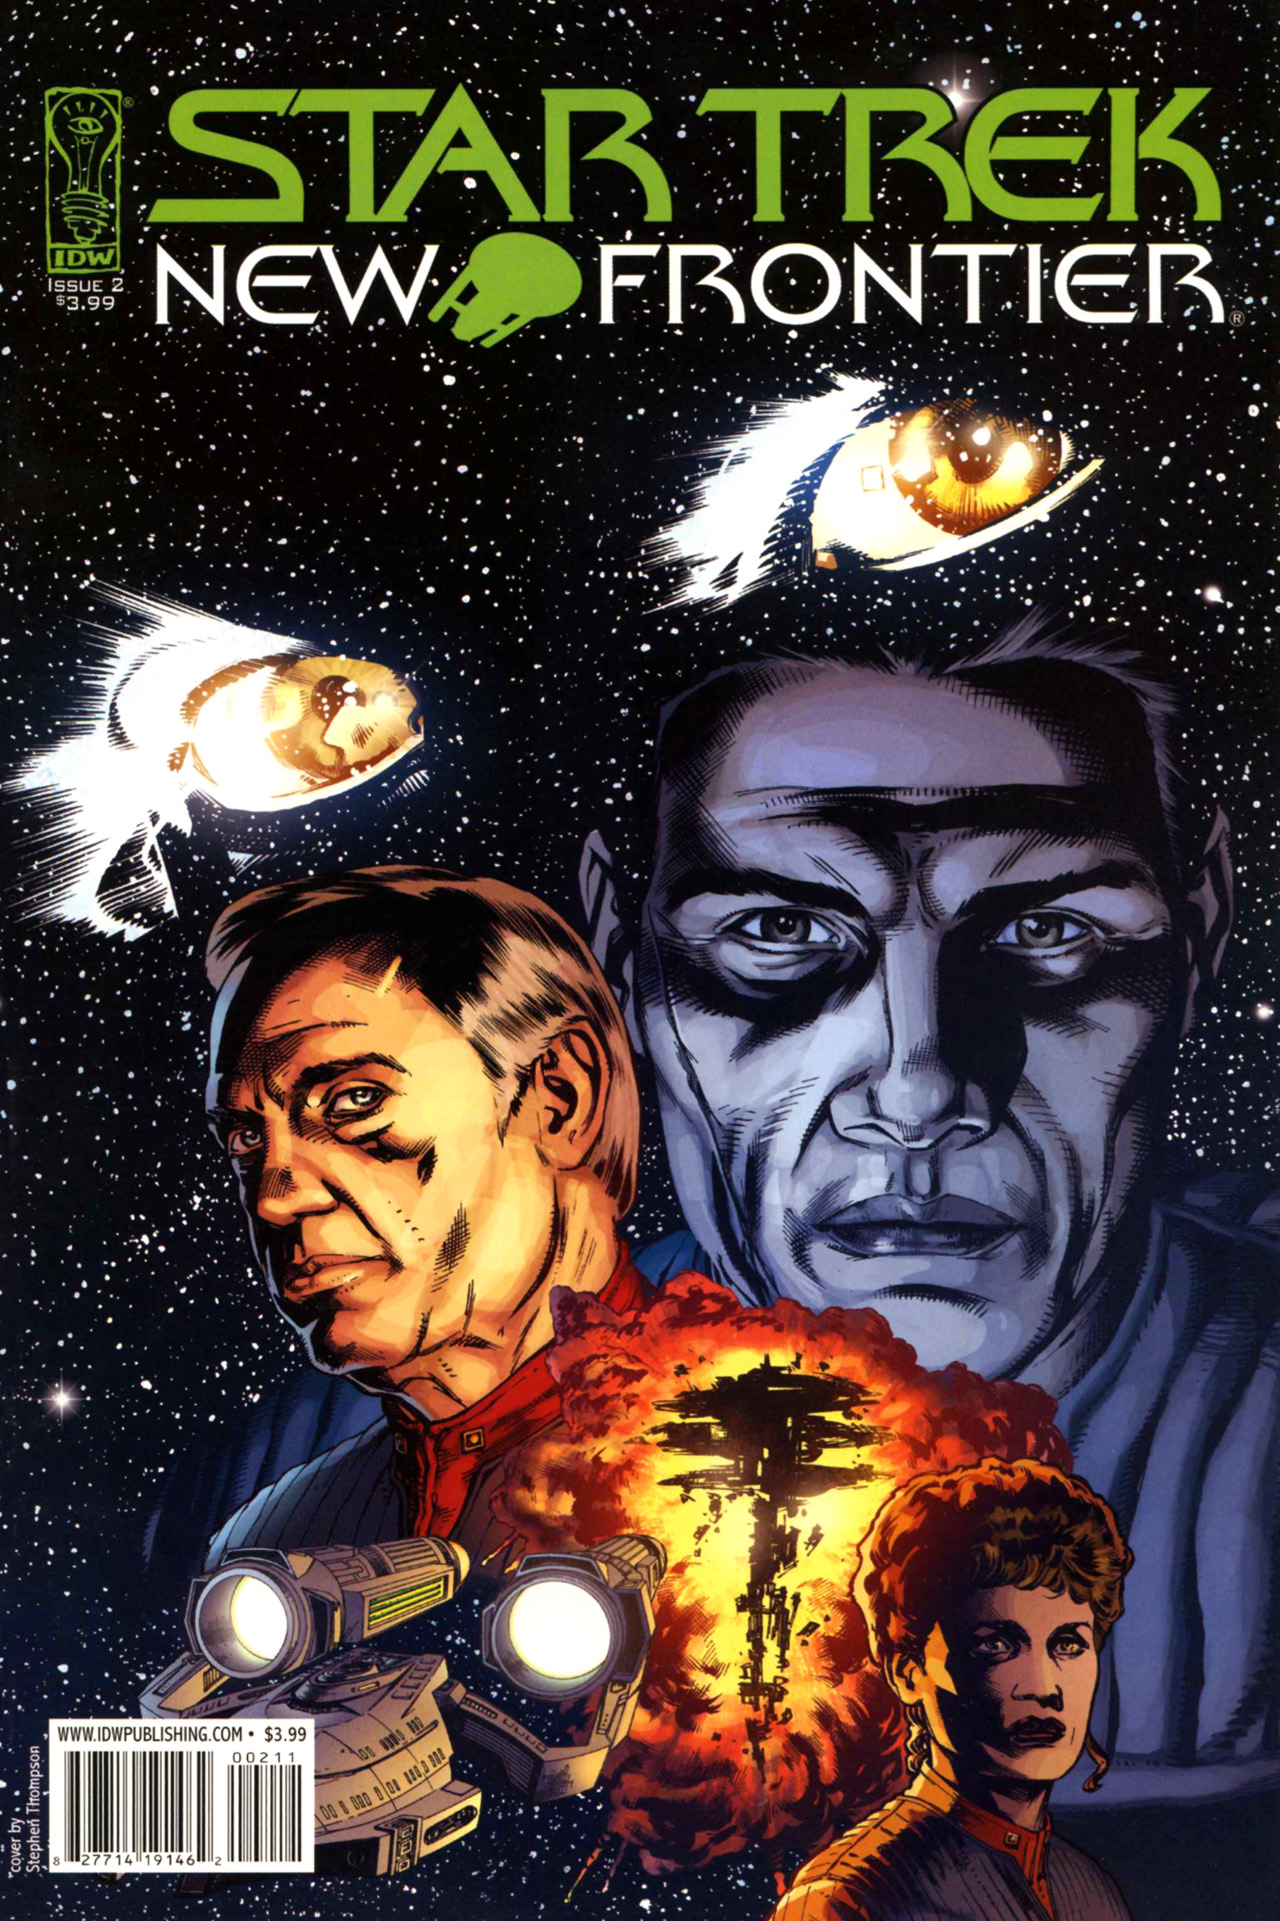 Star Trek New Frontier Issue 2 | Read Star Trek New Frontier Issue 